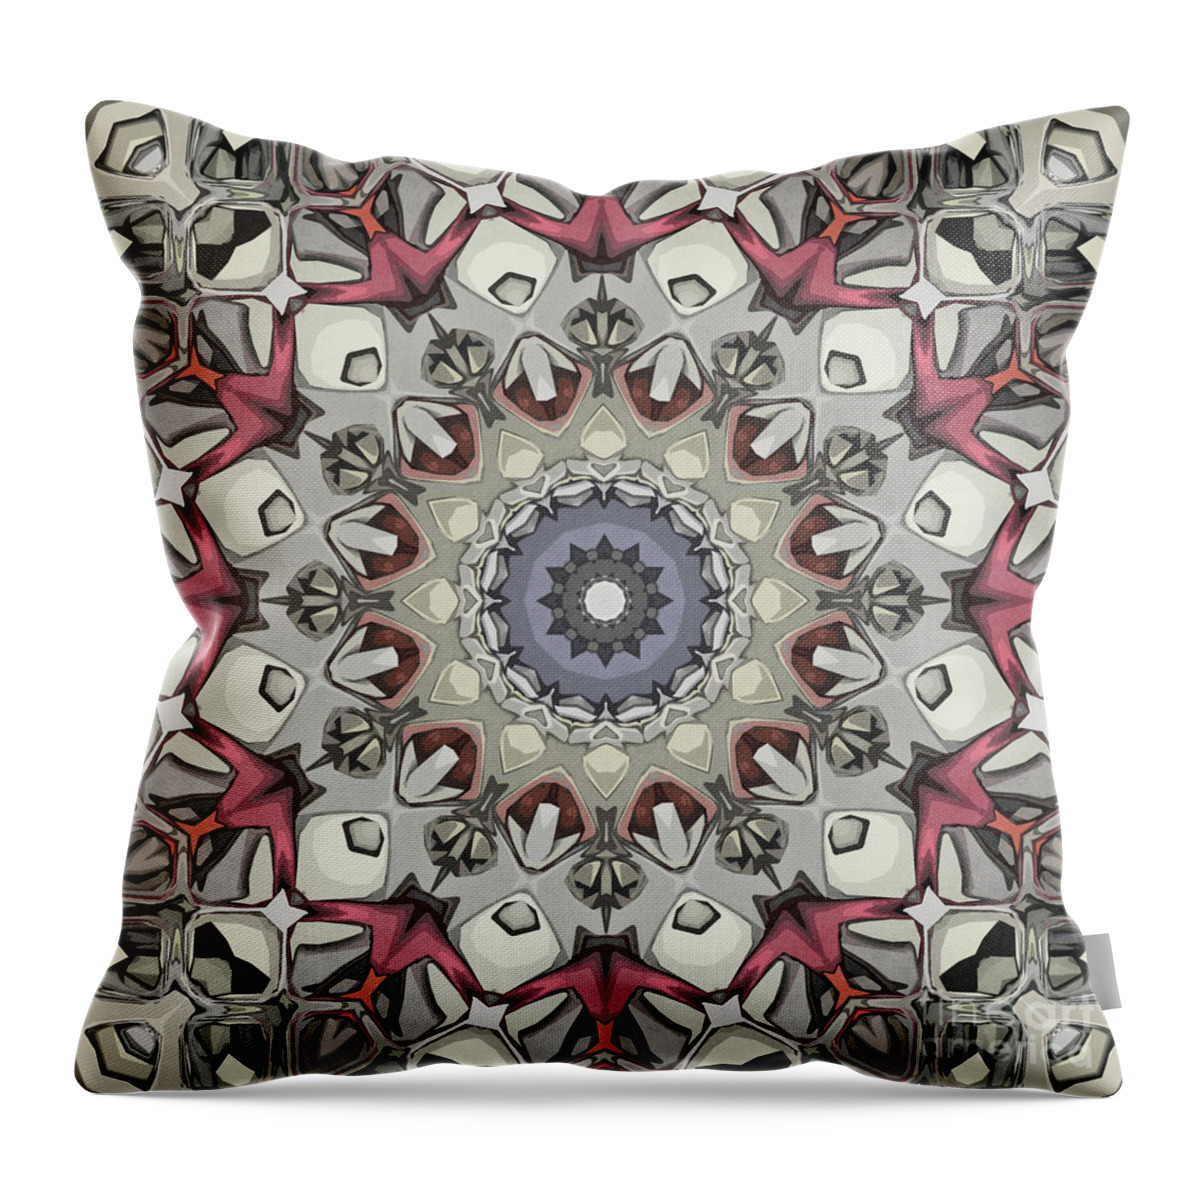 Digital Art Throw Pillow featuring the digital art Textured Mandala by Phil Perkins